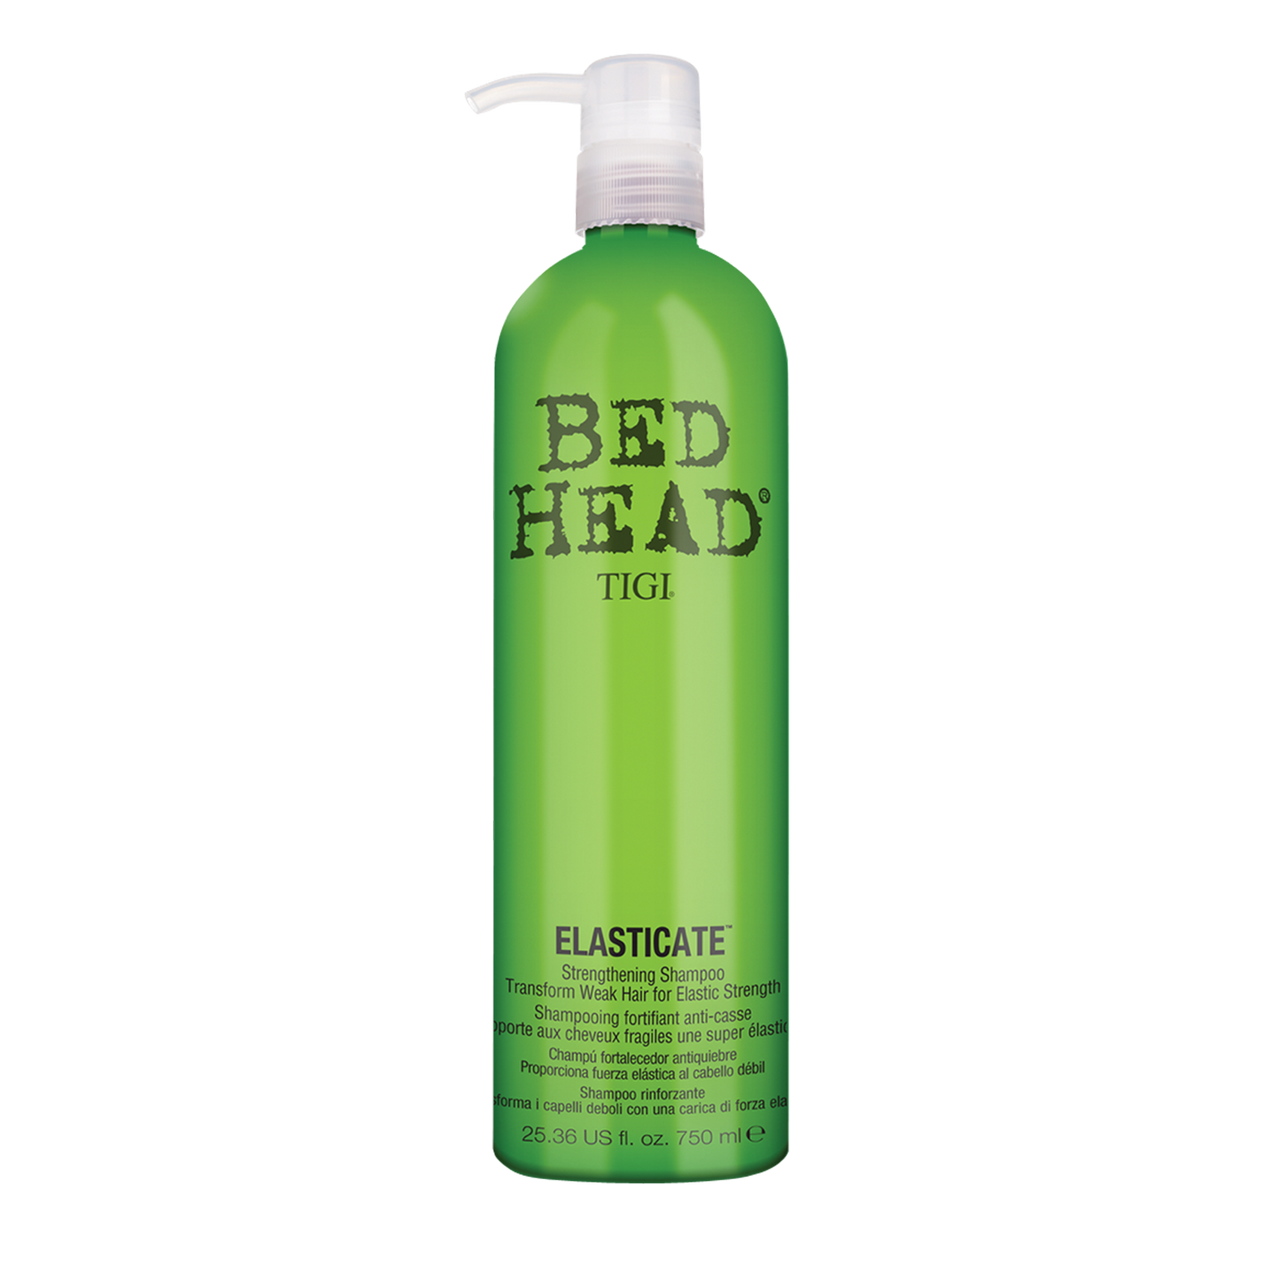 TIGI Bed Head Elasticate Shampoo 25.36 fl. oz.